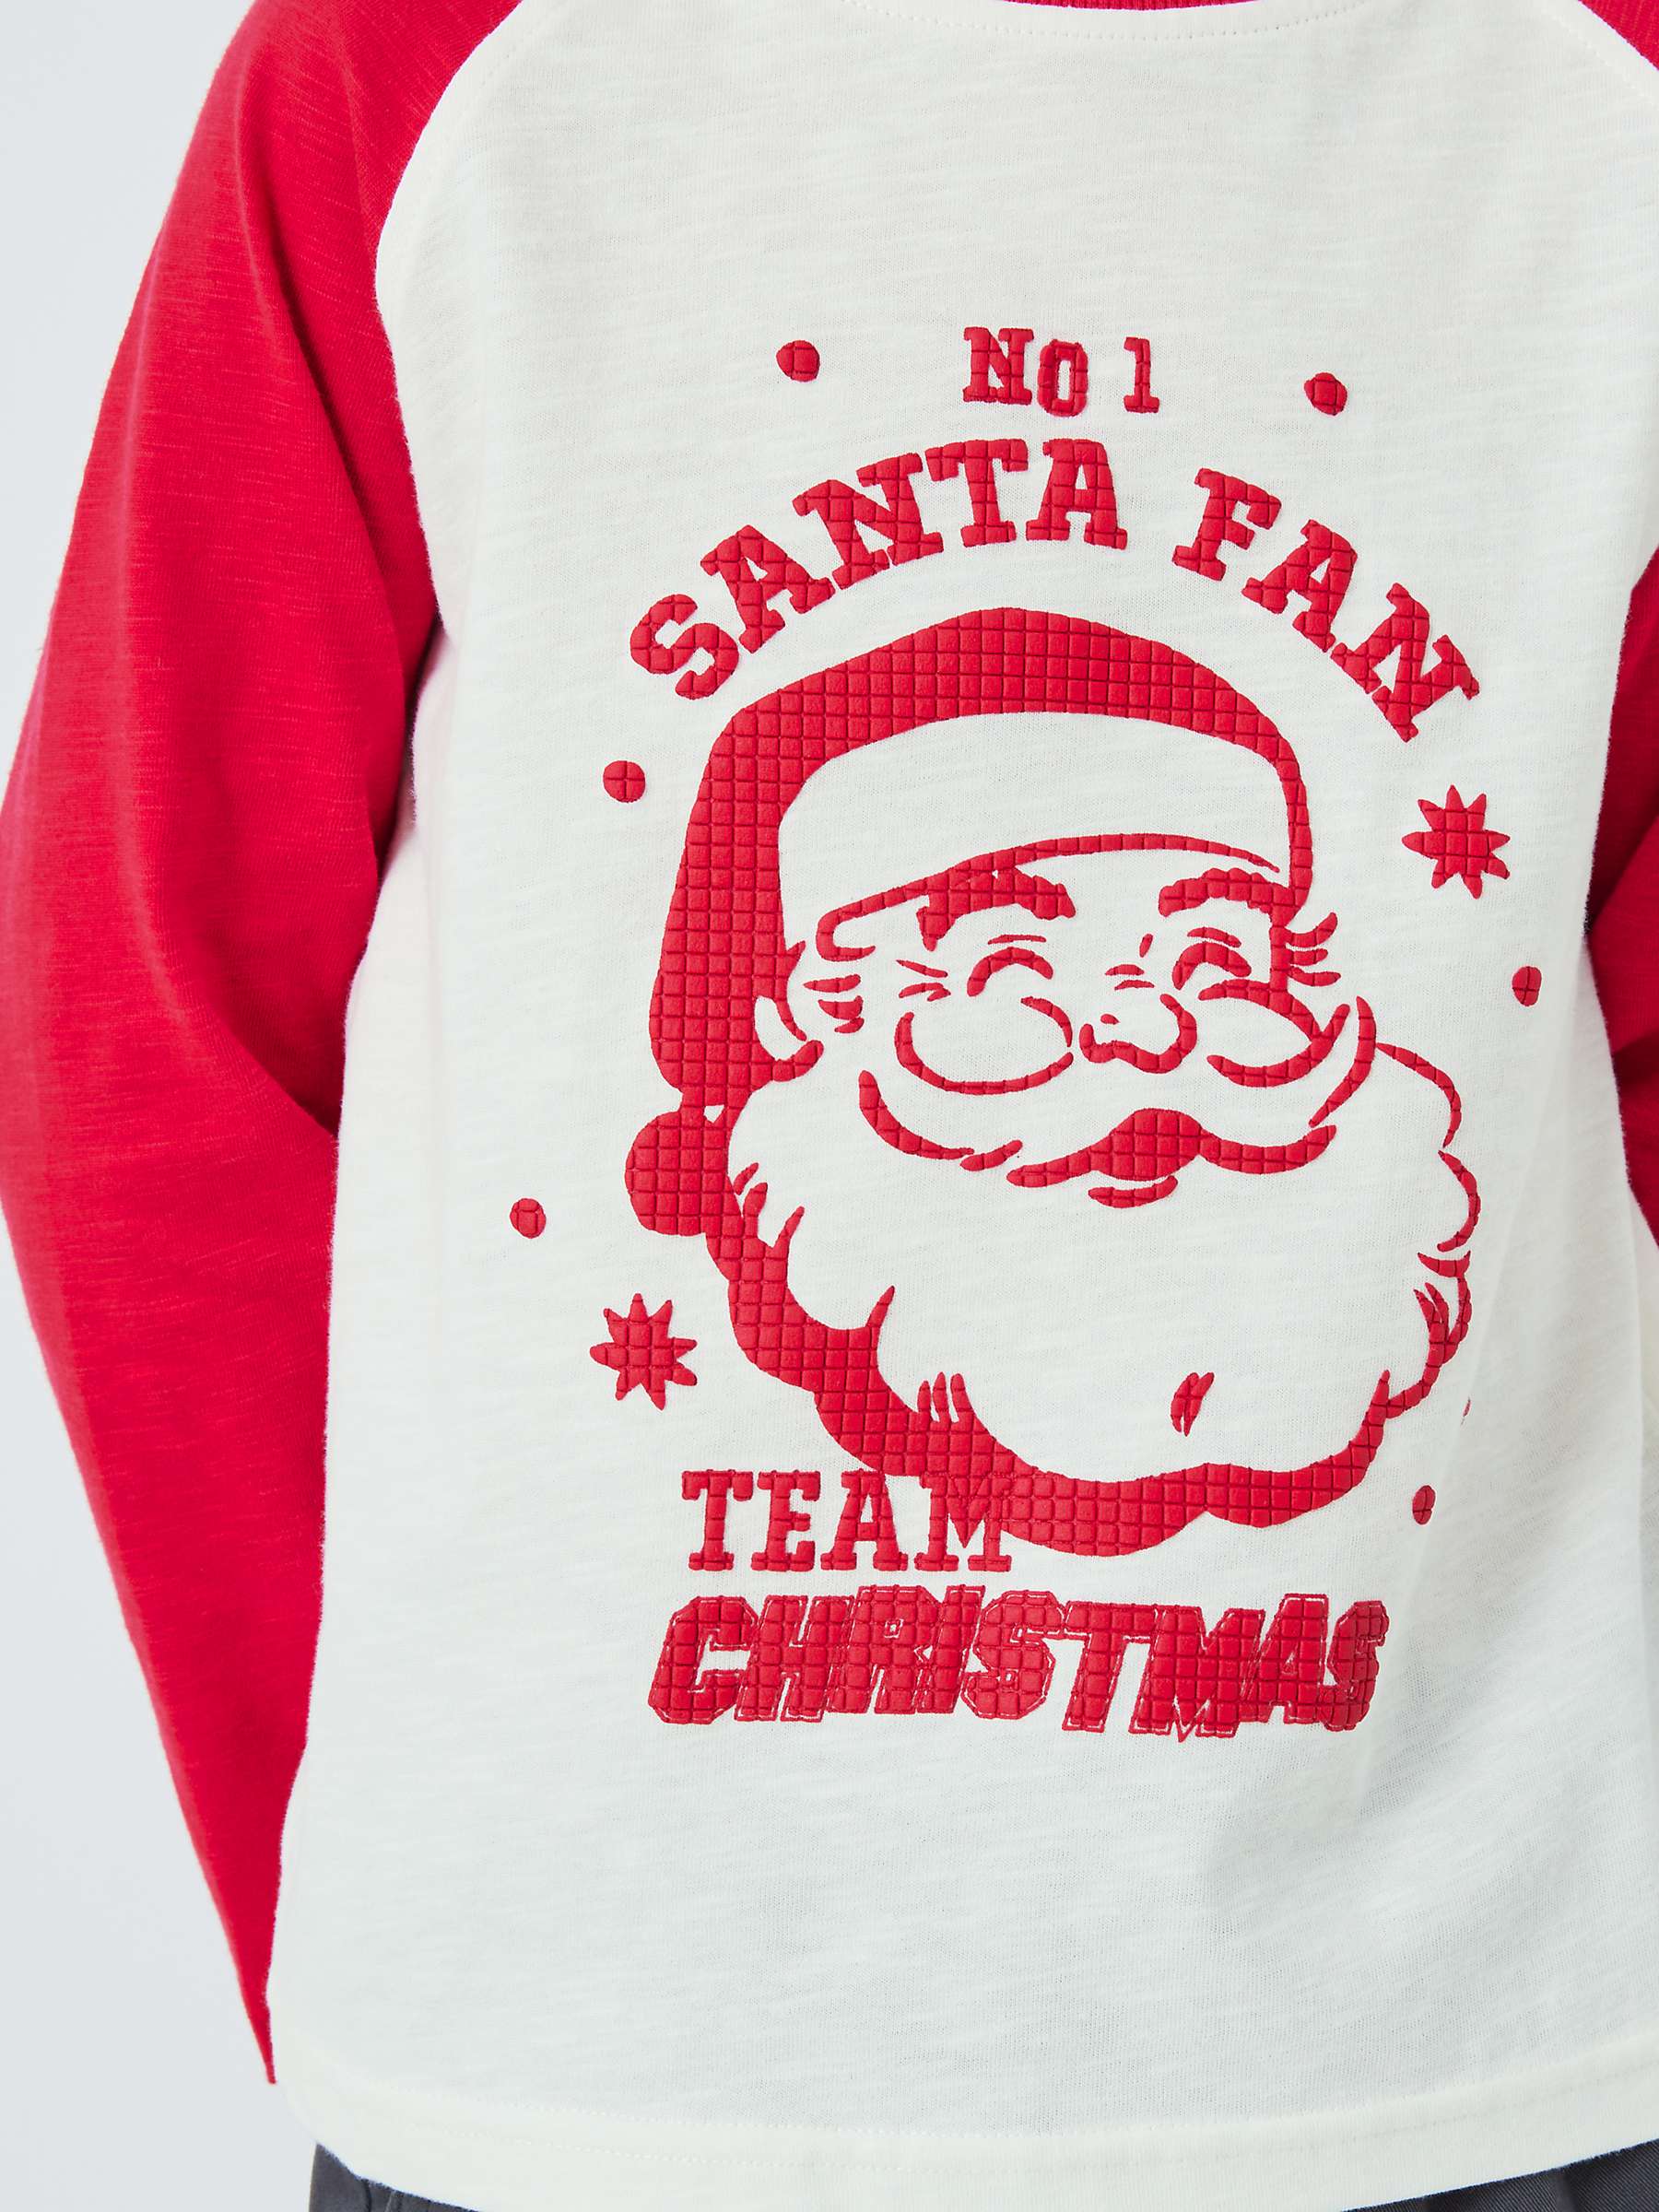 Buy John Lewis Kids' No.1 Santa Fan Christmas Top, Red/White Online at johnlewis.com